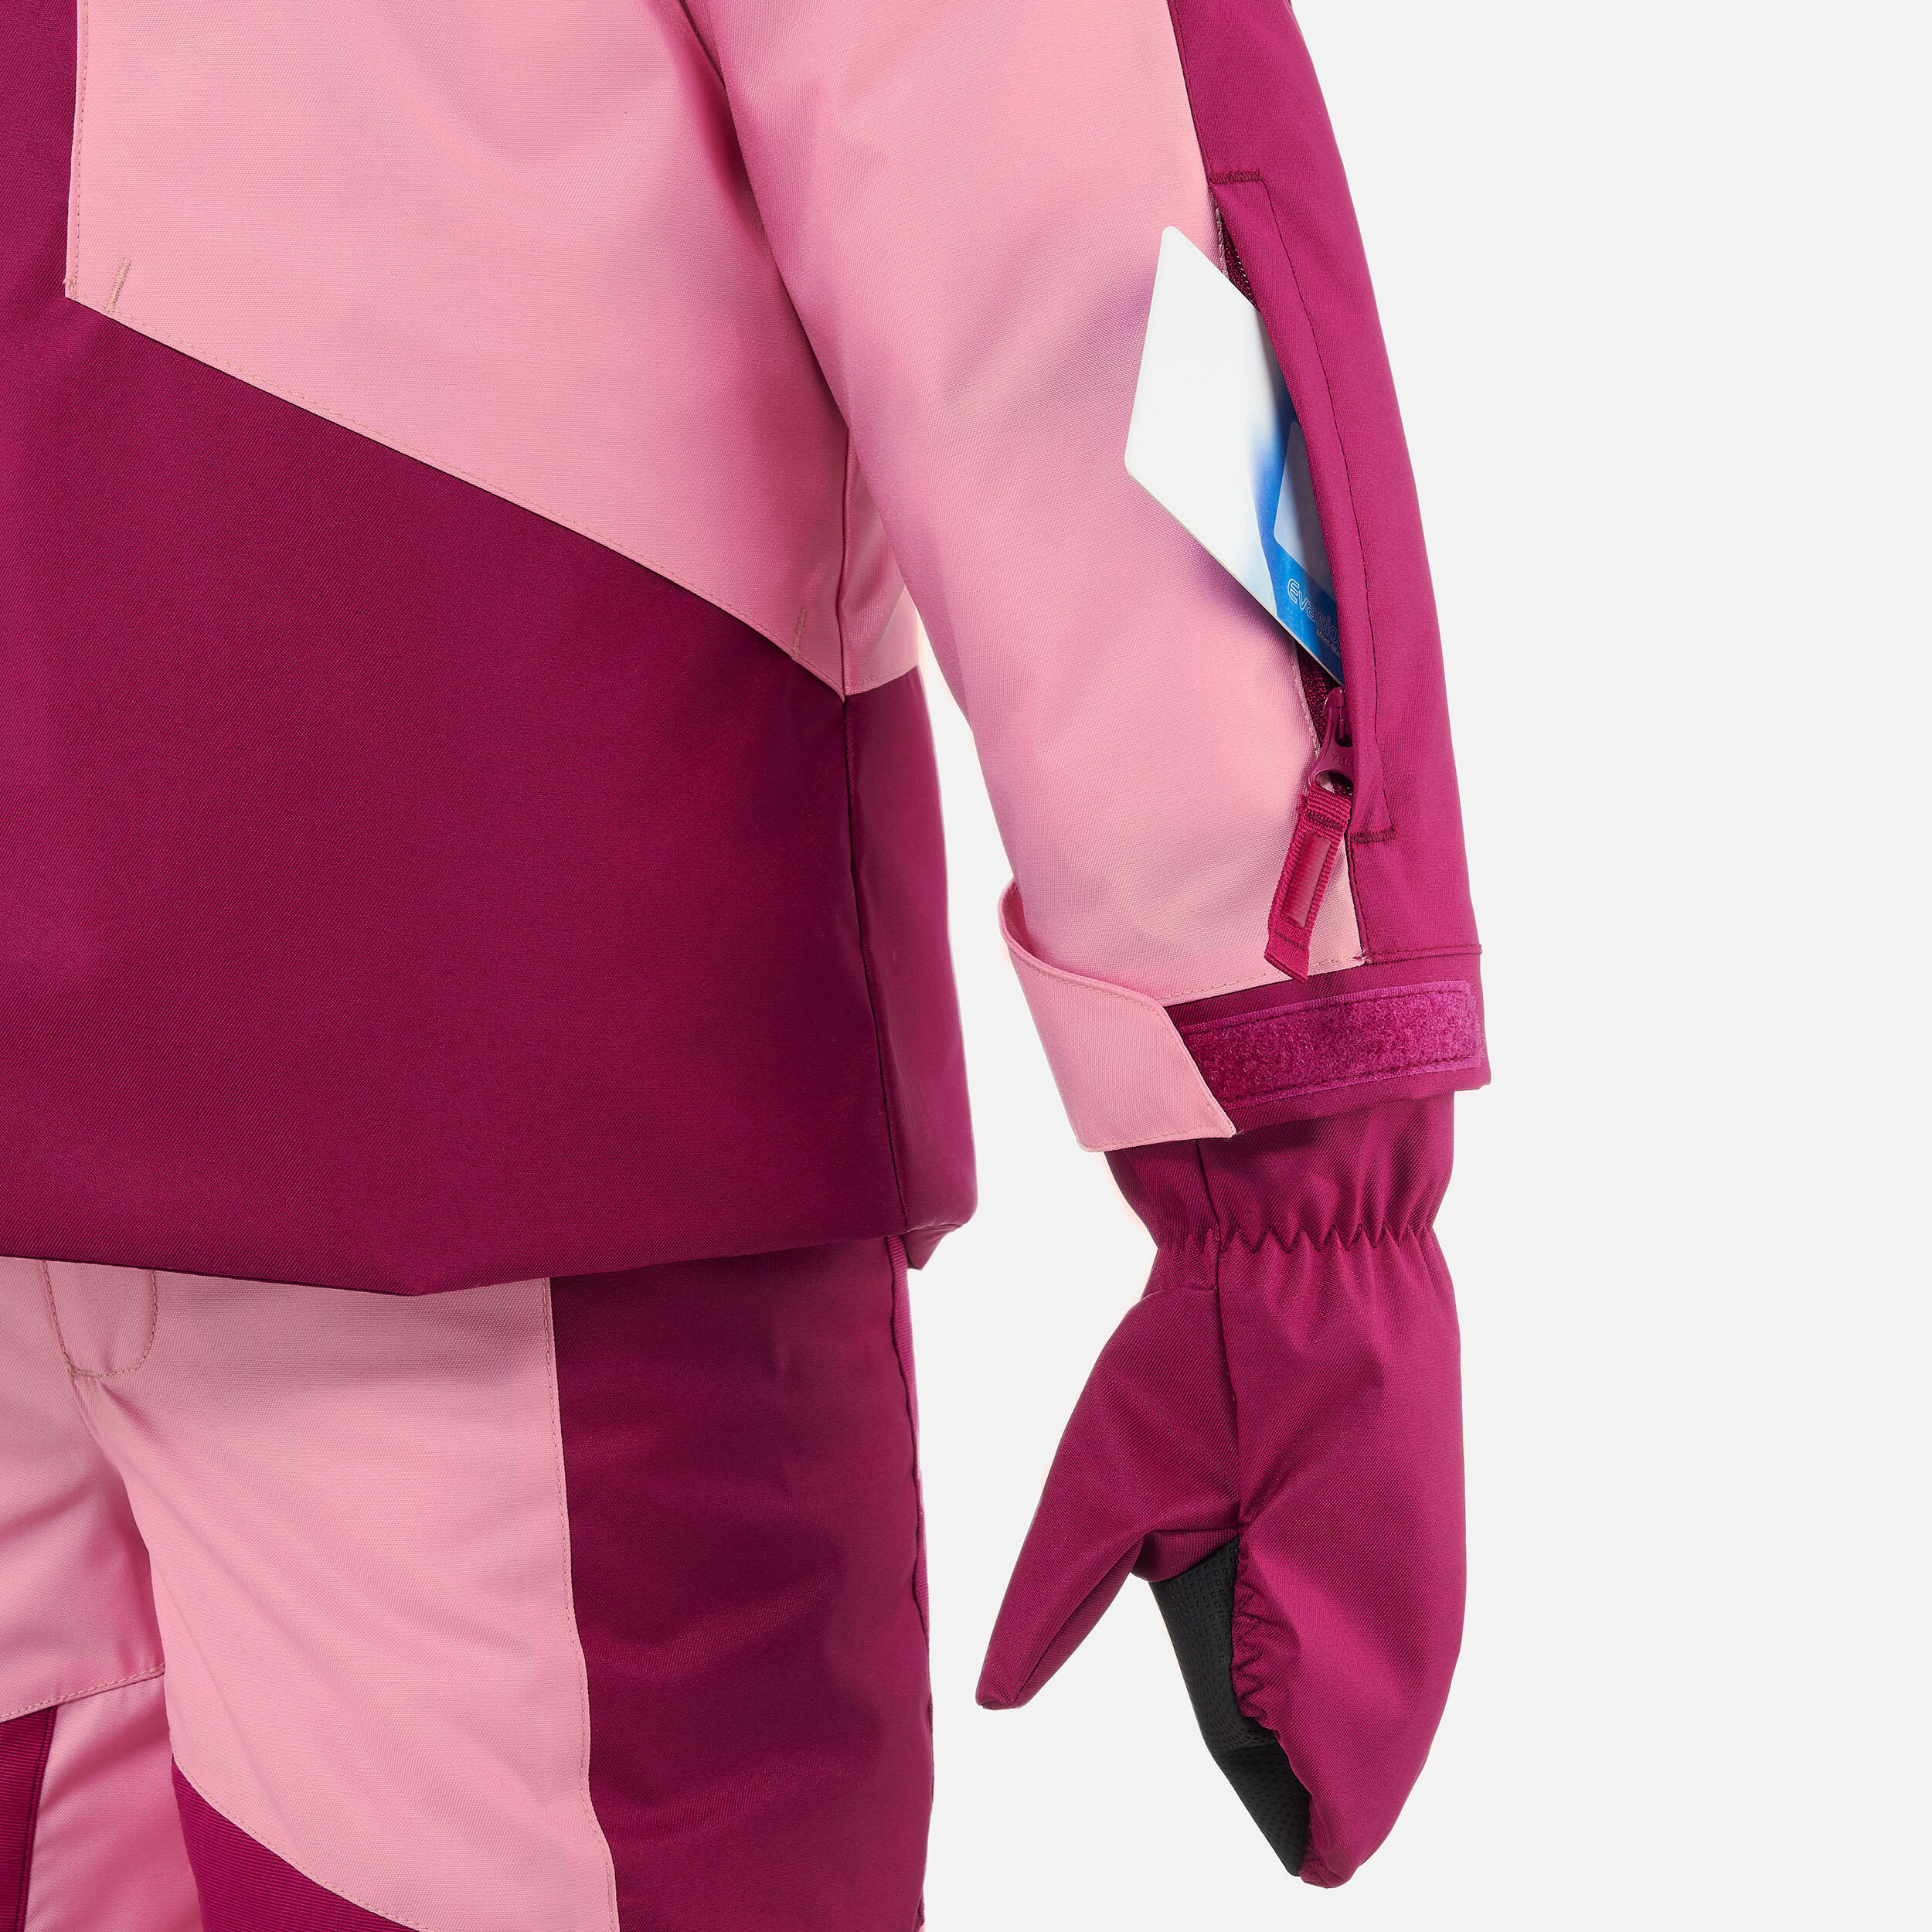 Kids’ Warm and Waterproof Ski Suit 580 - Pink 8/15